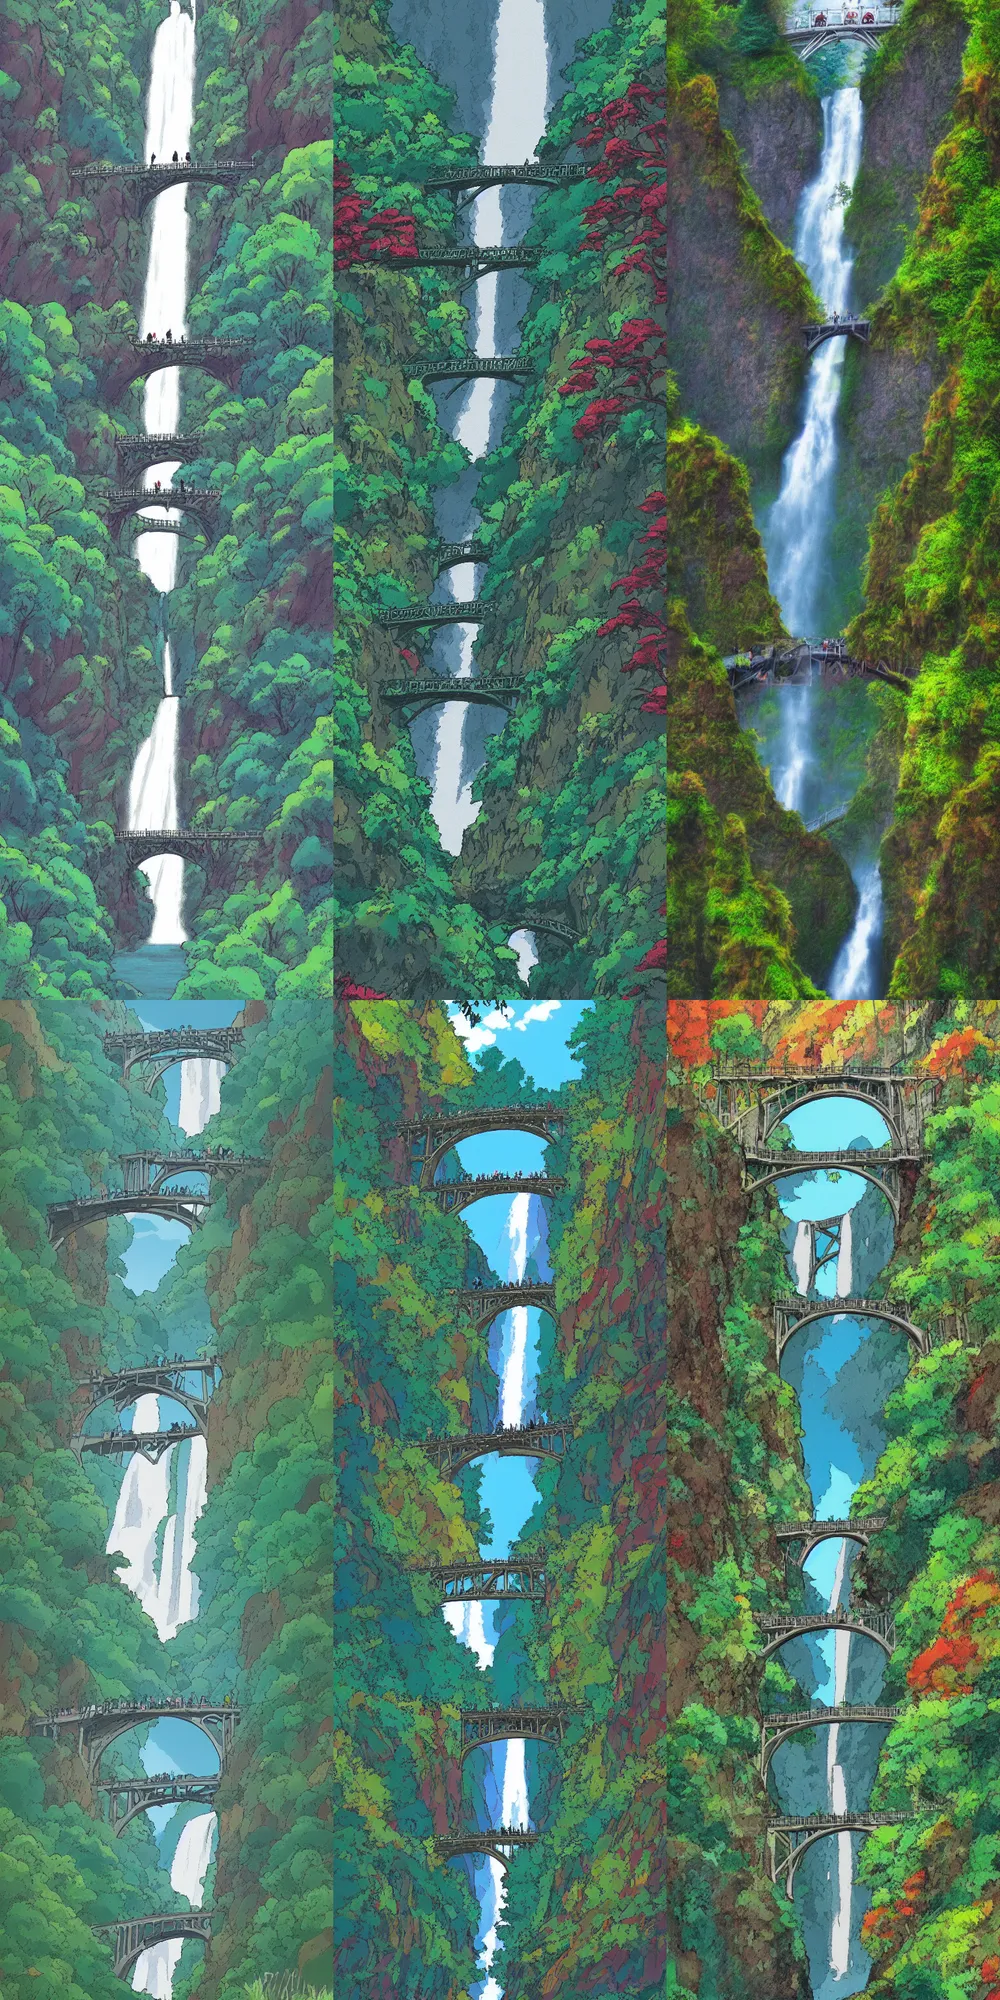 Prompt: multnomah falls oregon in the style of studio ghibli, hayao miyazaki, colorful, detailed